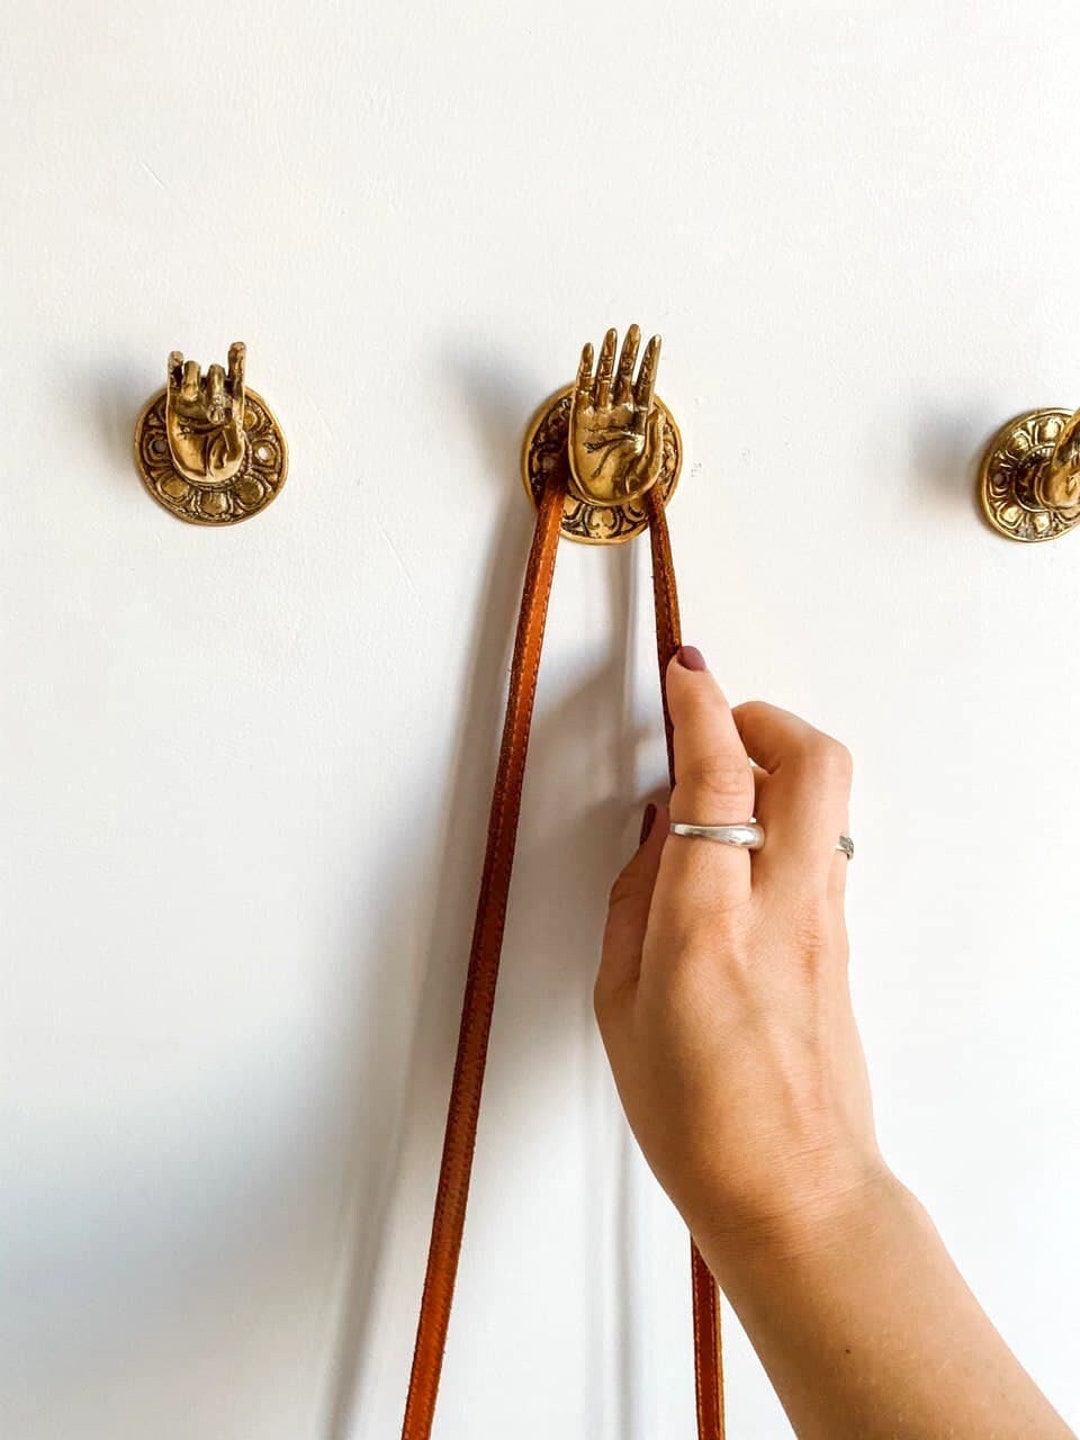 Decorative Brass Coat Hooks Wall Hooks Mother of Pearl Key Hooks